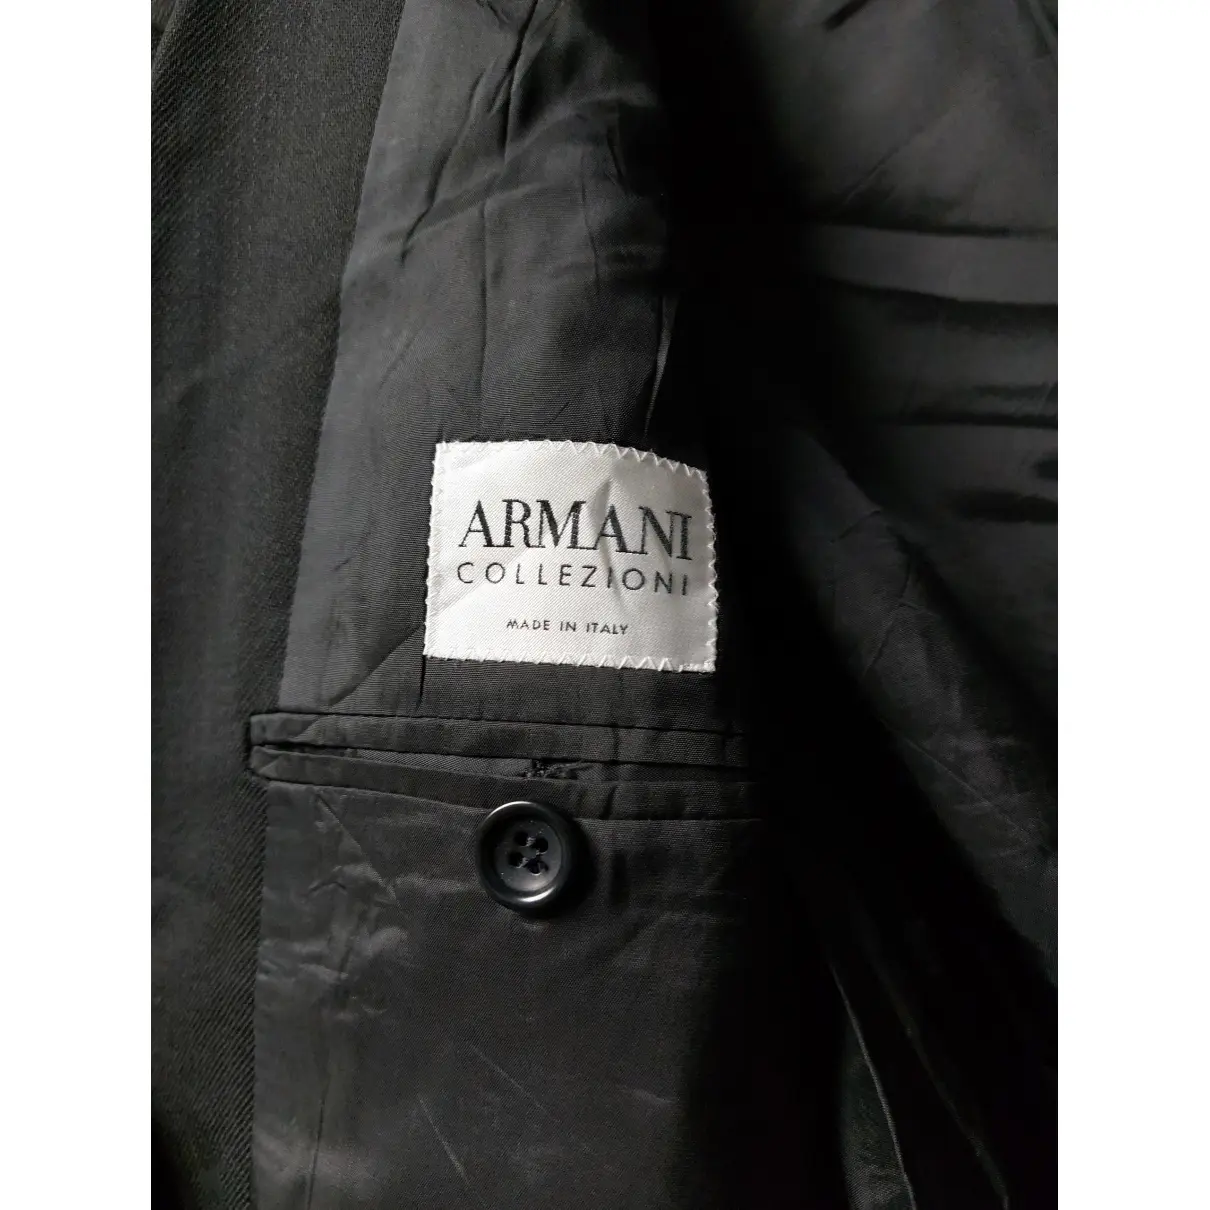 Buy Armani Collezioni Wool jacket online